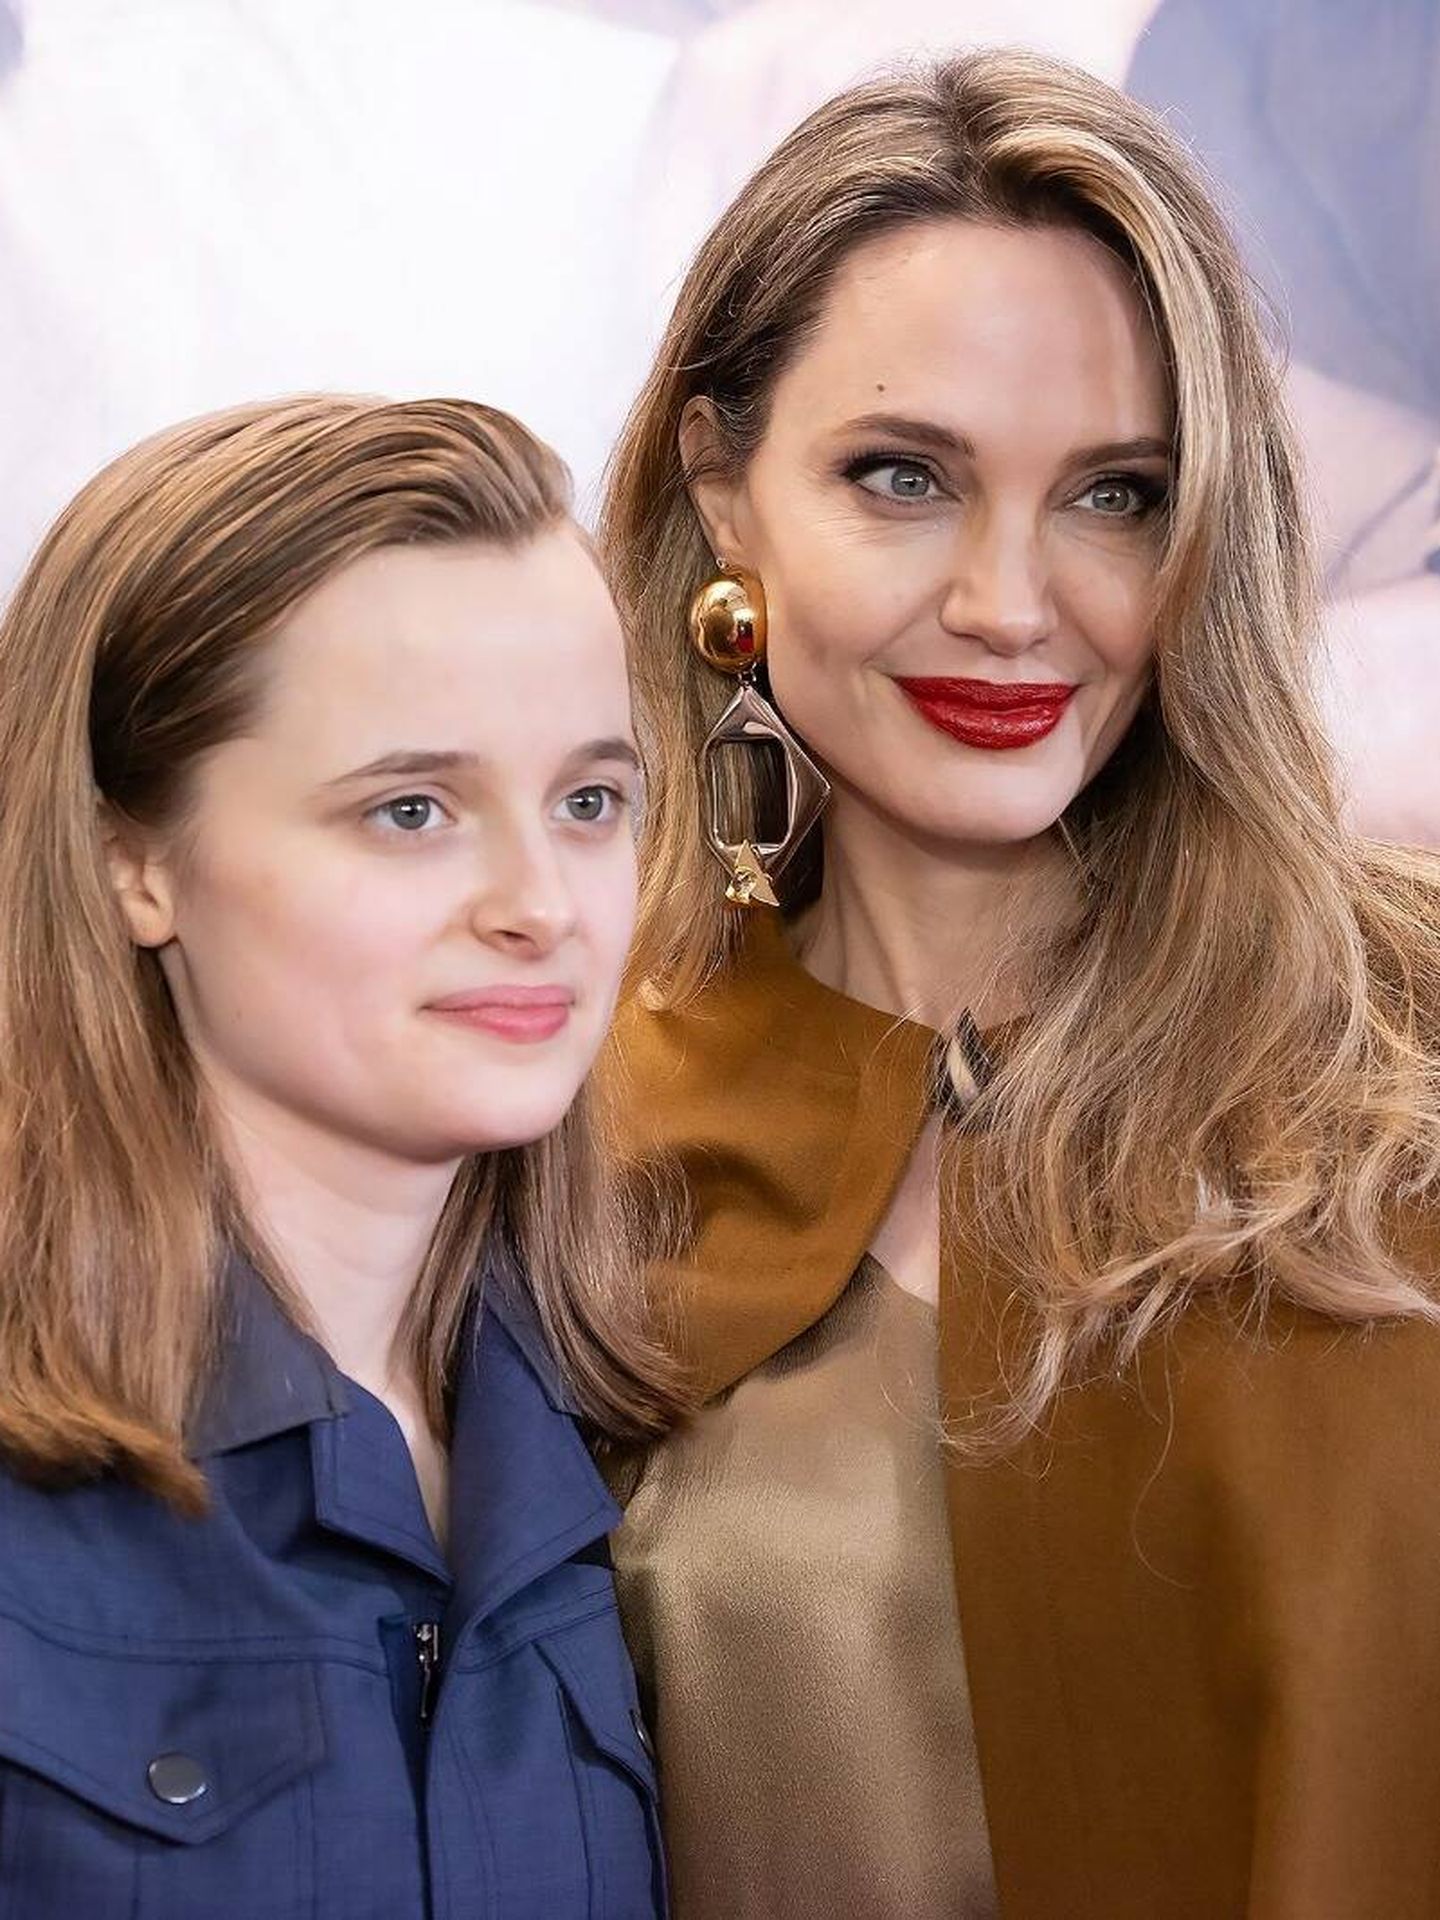 Vivienne Pitt Jolie y su madre, Angelina Jolie, en Nueva York. (Gtres)